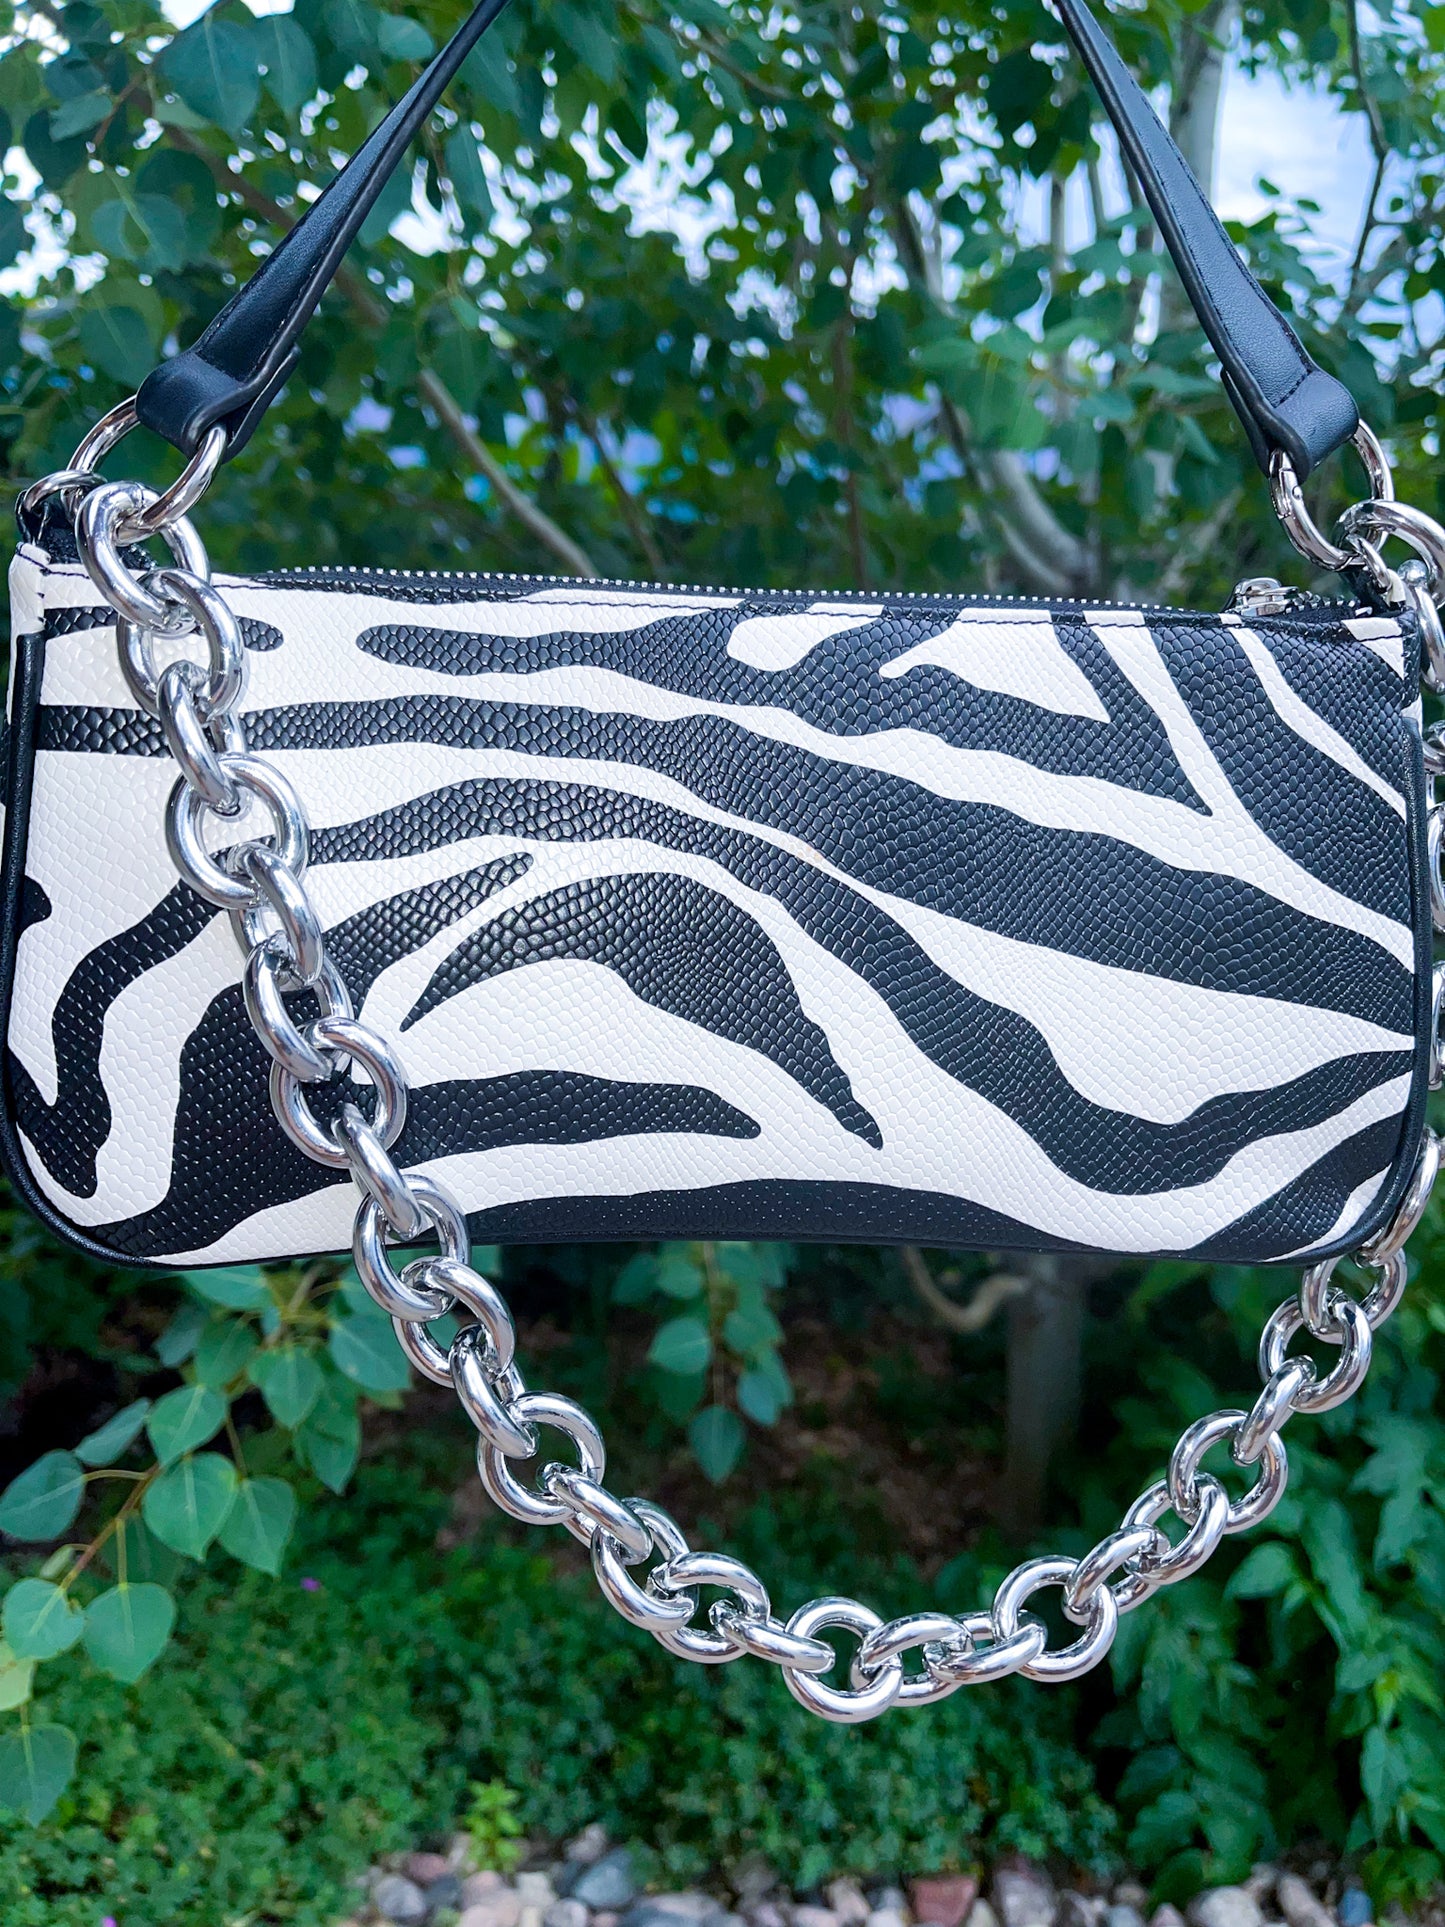 Zebra handbag